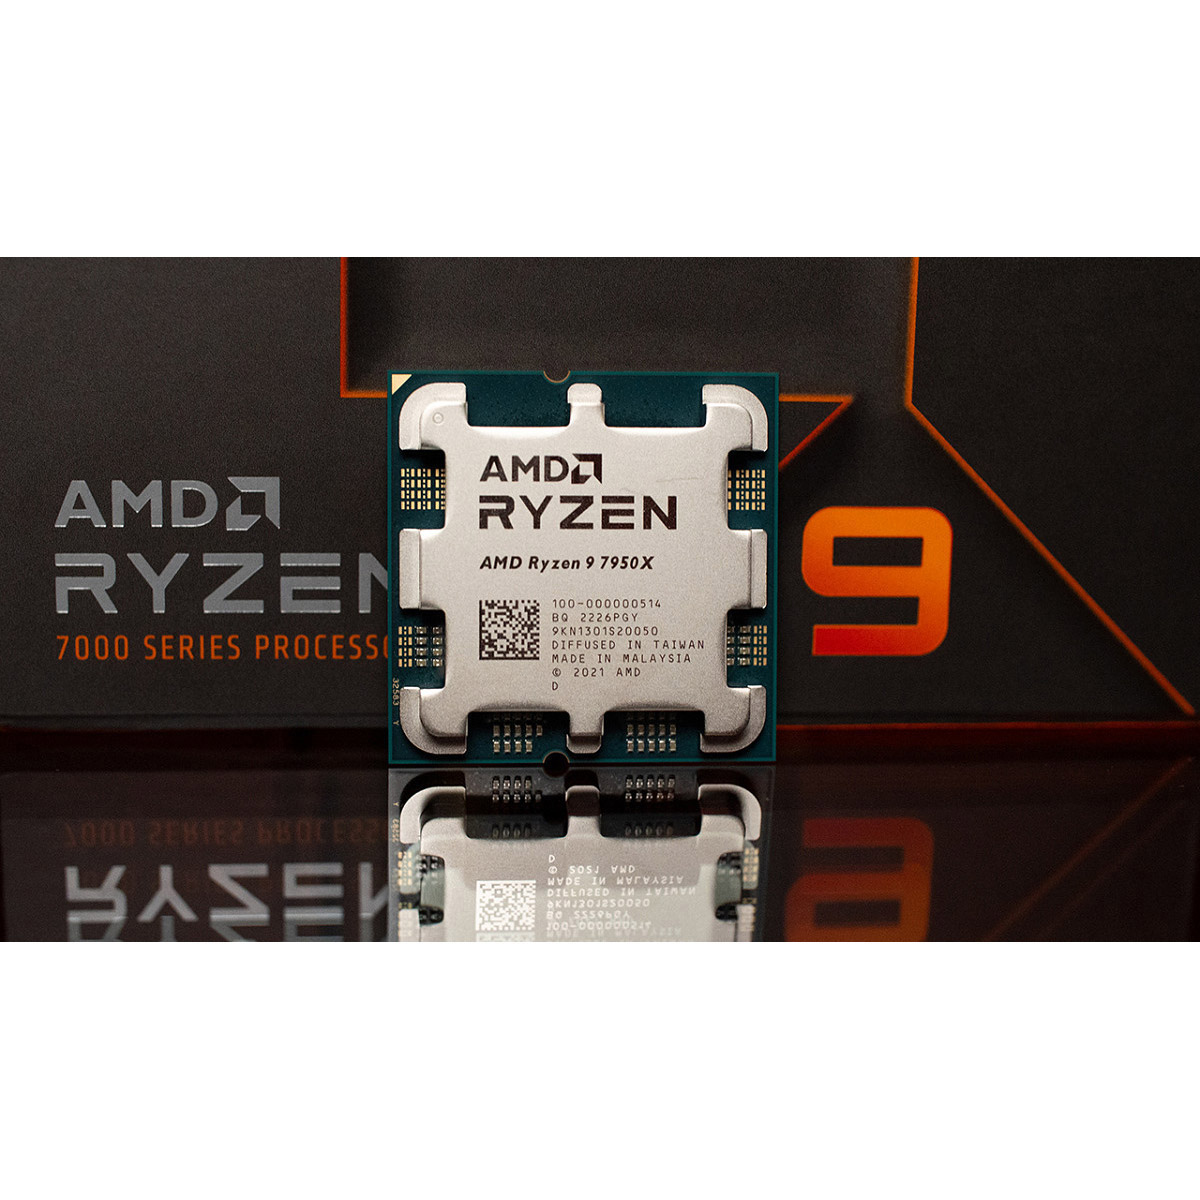 Amd ryzen 9 7950x am5. Процессор Ryzen 5. AMD Ryzen 5 3600. I9 12900k. AMD Ryzen 9 5900x купить.